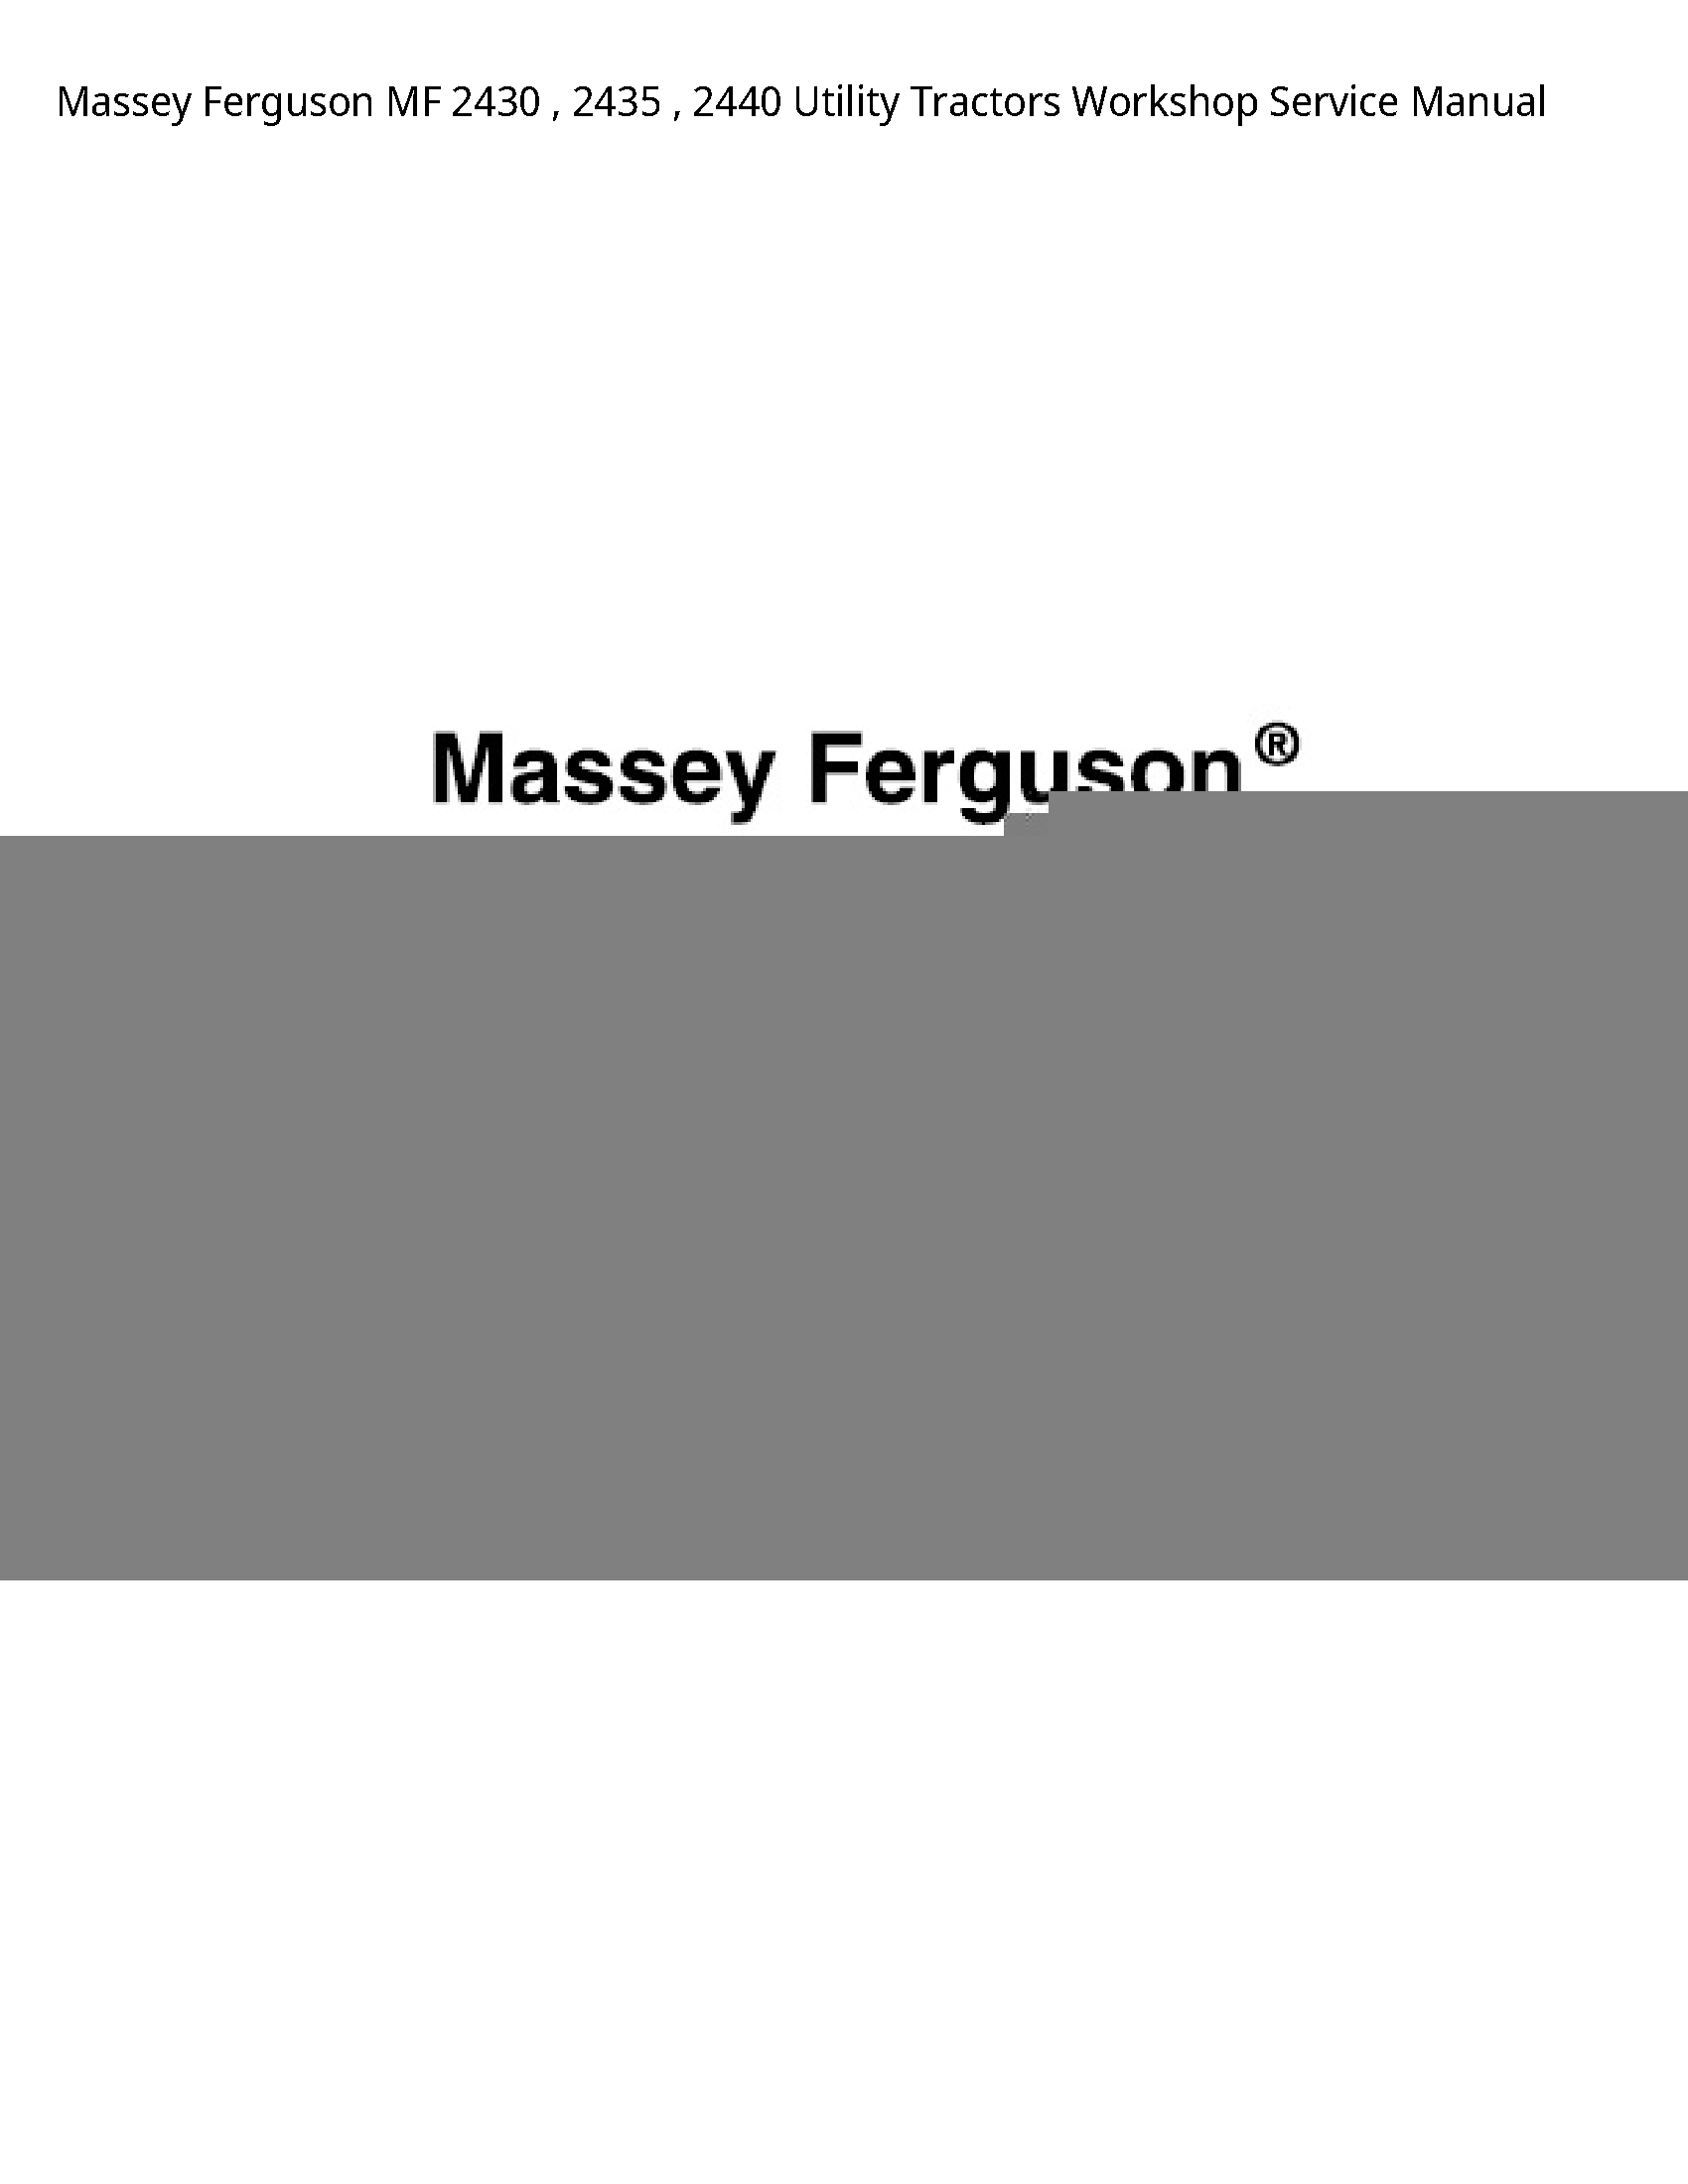 Massey Ferguson 2430 MF Utility Tractors Service manual